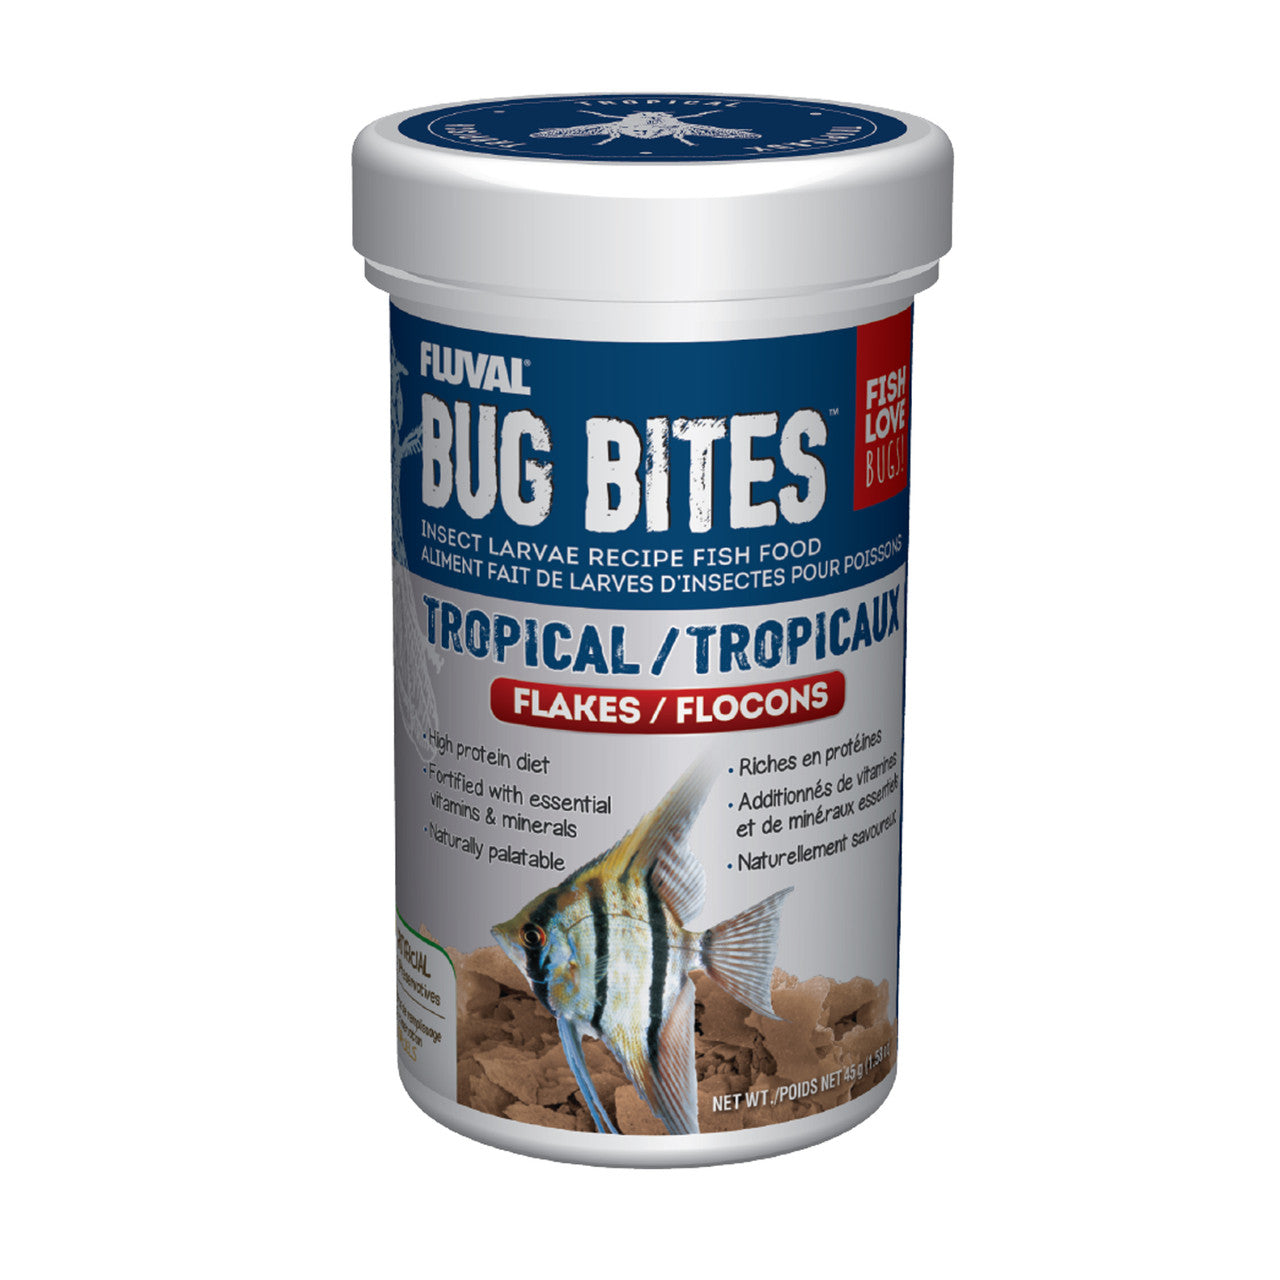 Fluval Bug Bites Tropical Flakes 1.59 oz 015561173315